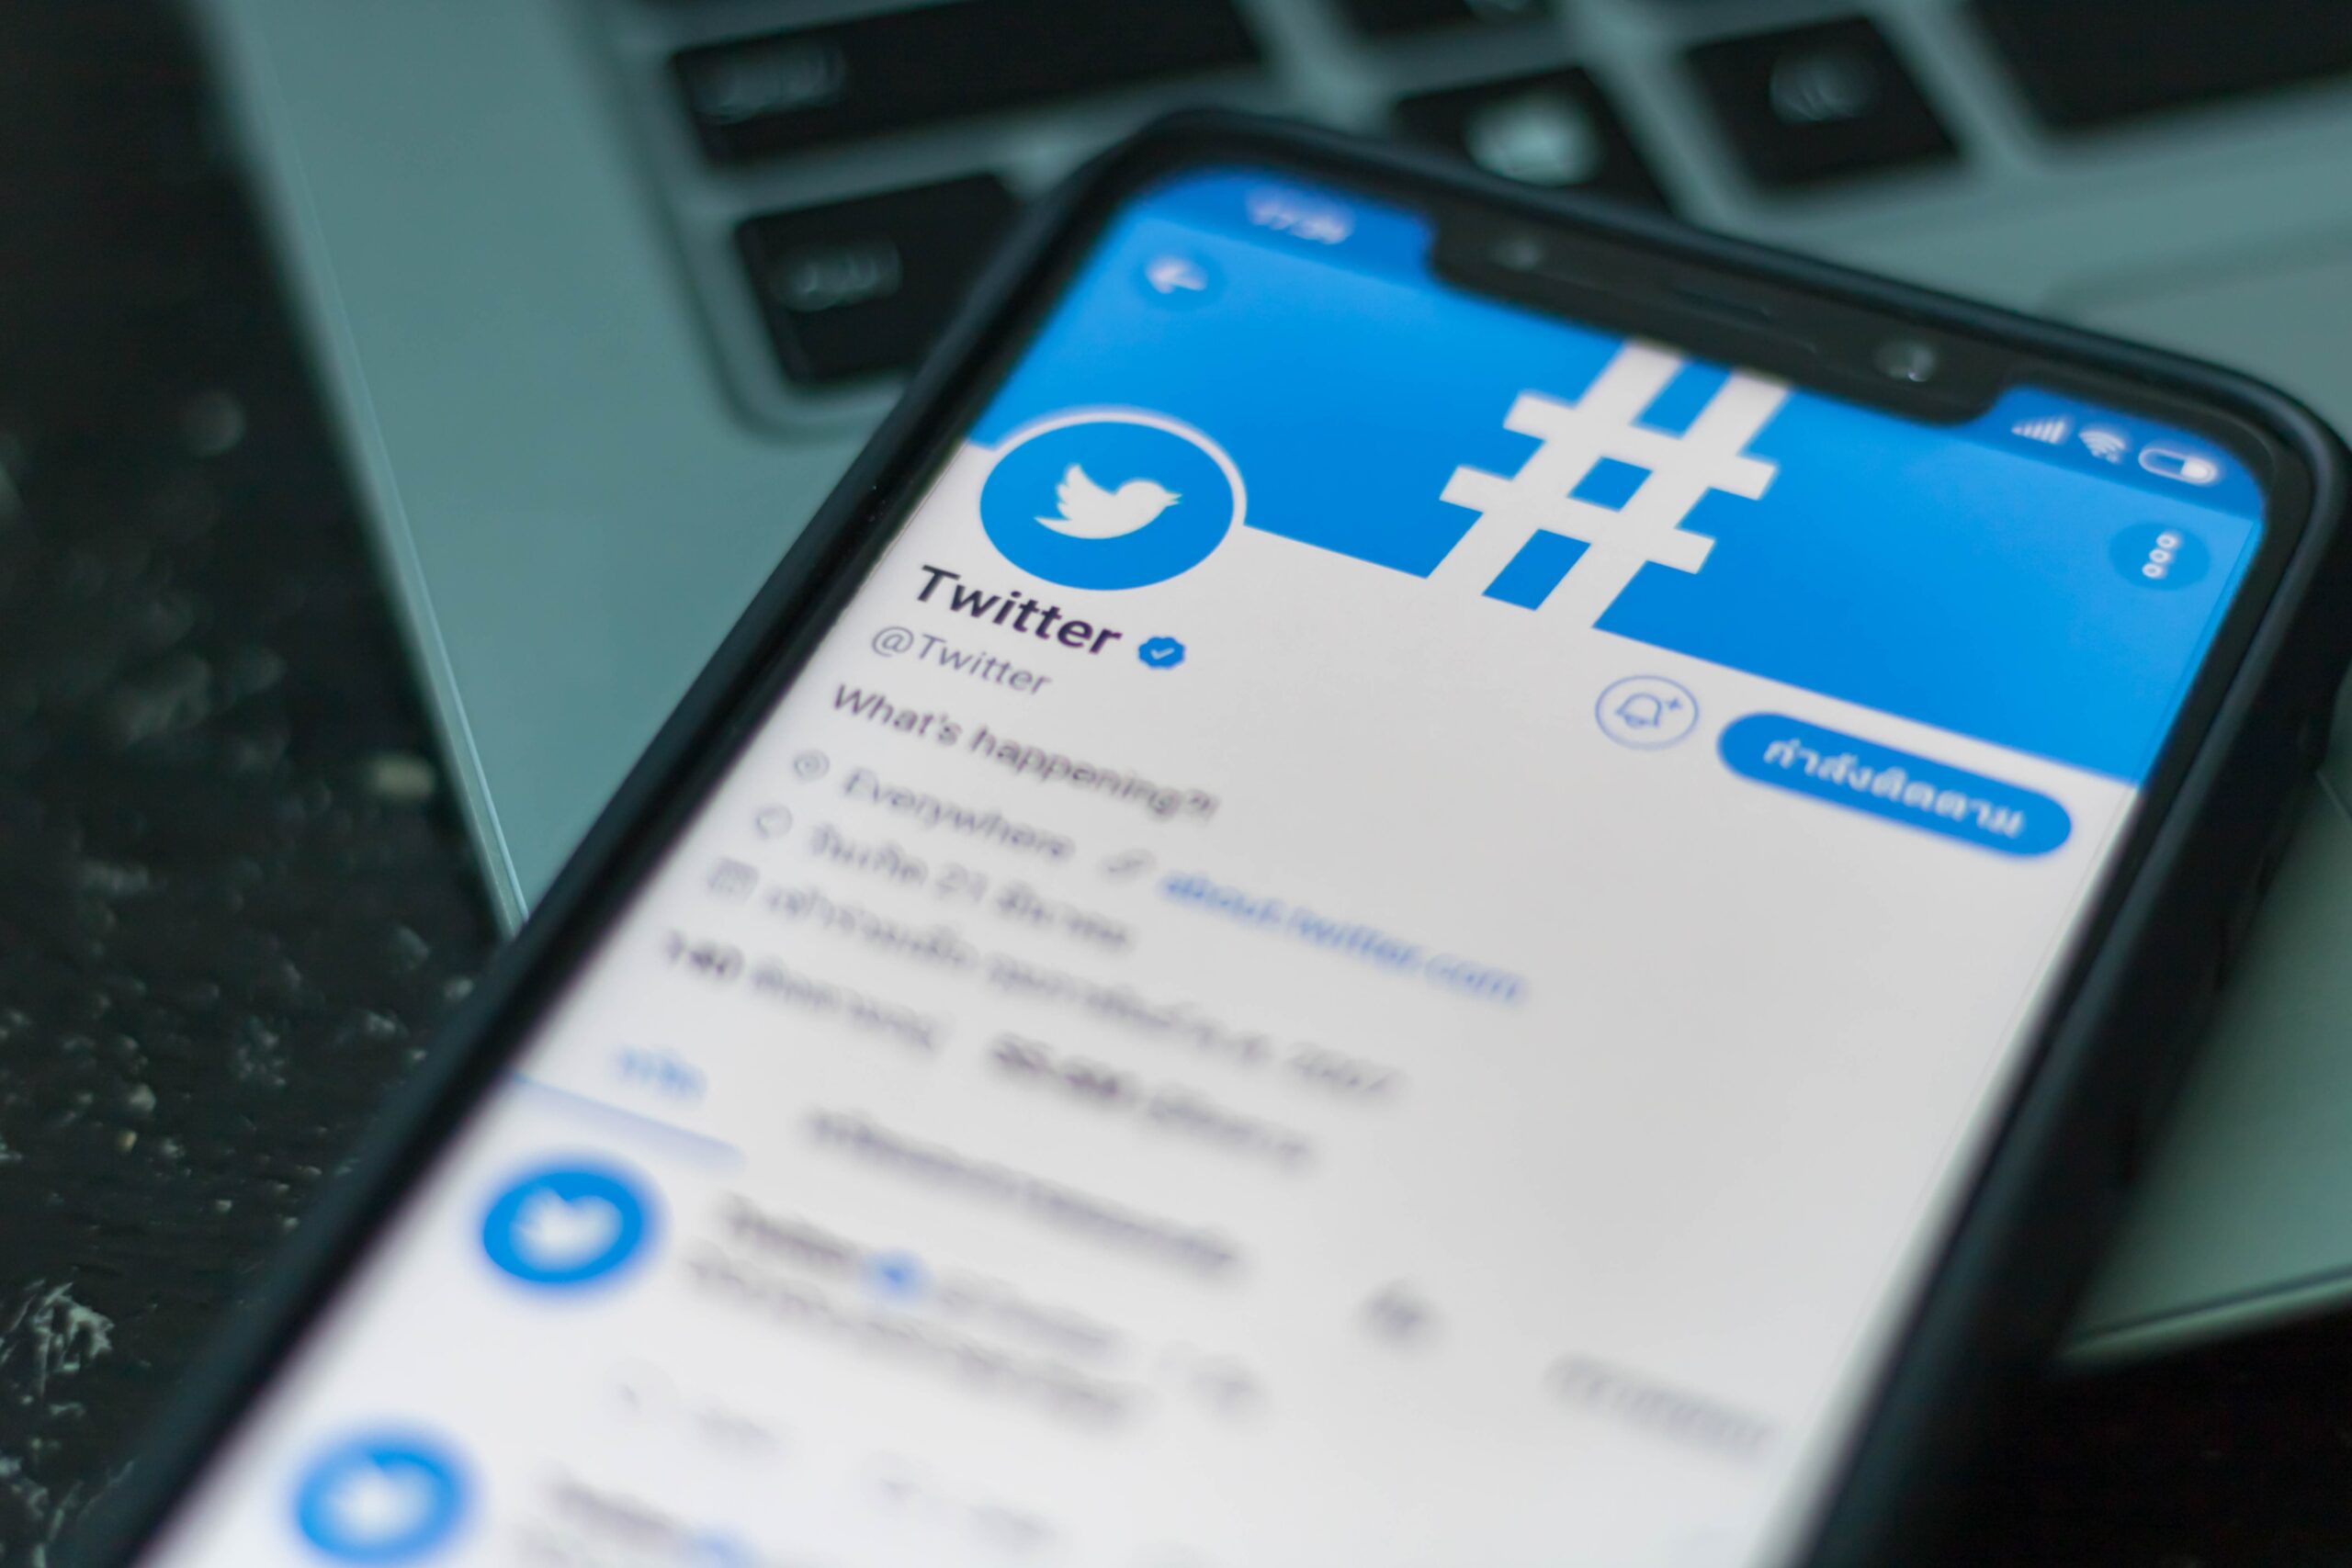 Can Twitter Help Break The News?